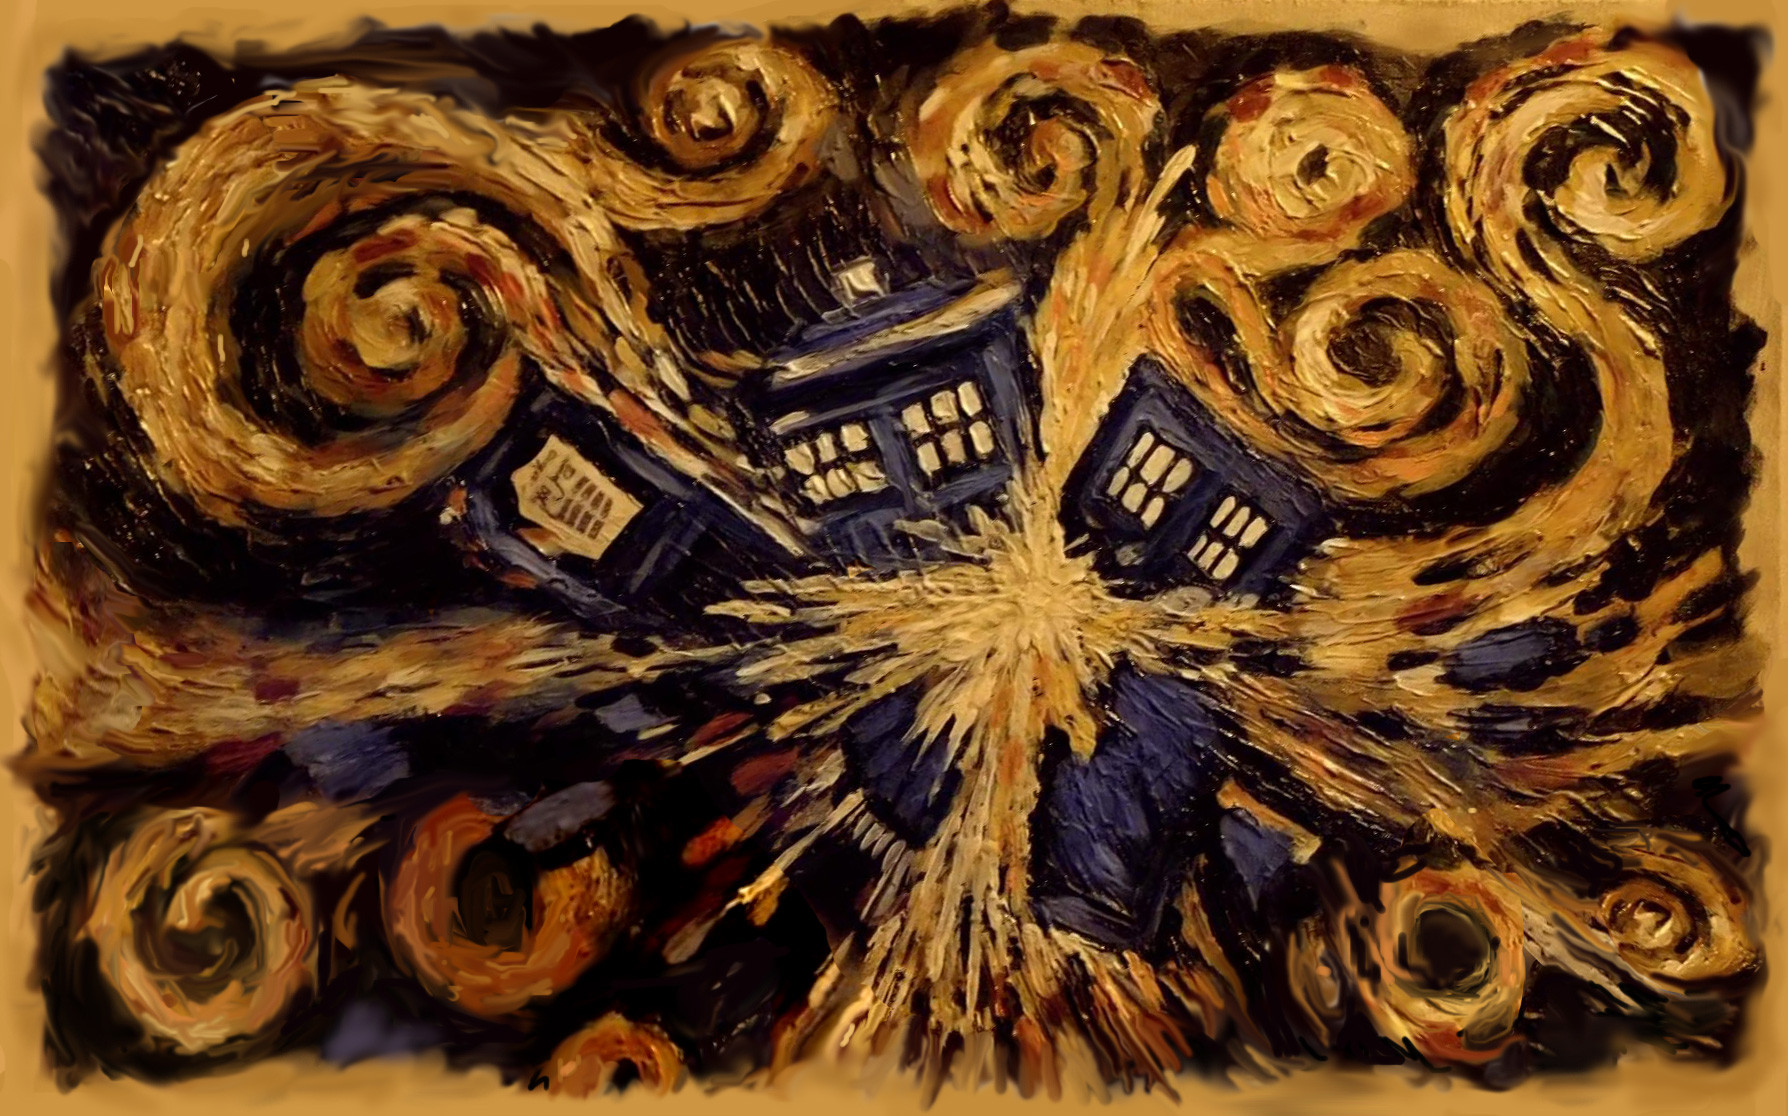 Doctor Who Tardis Wallpaper Van Gogh Image Pictures Becuo